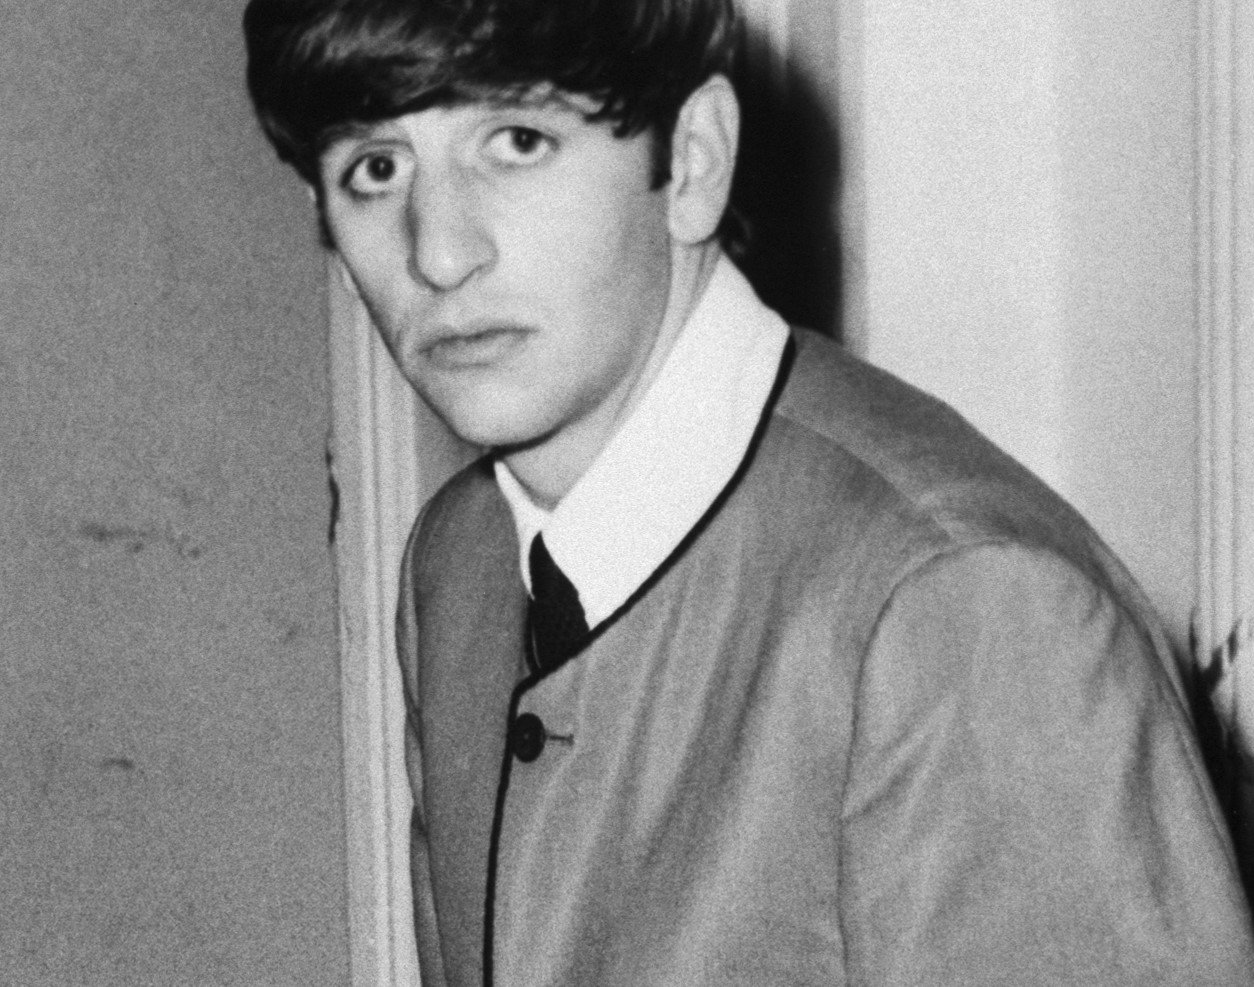 The Beatles' Ringo Starr looking unhappy